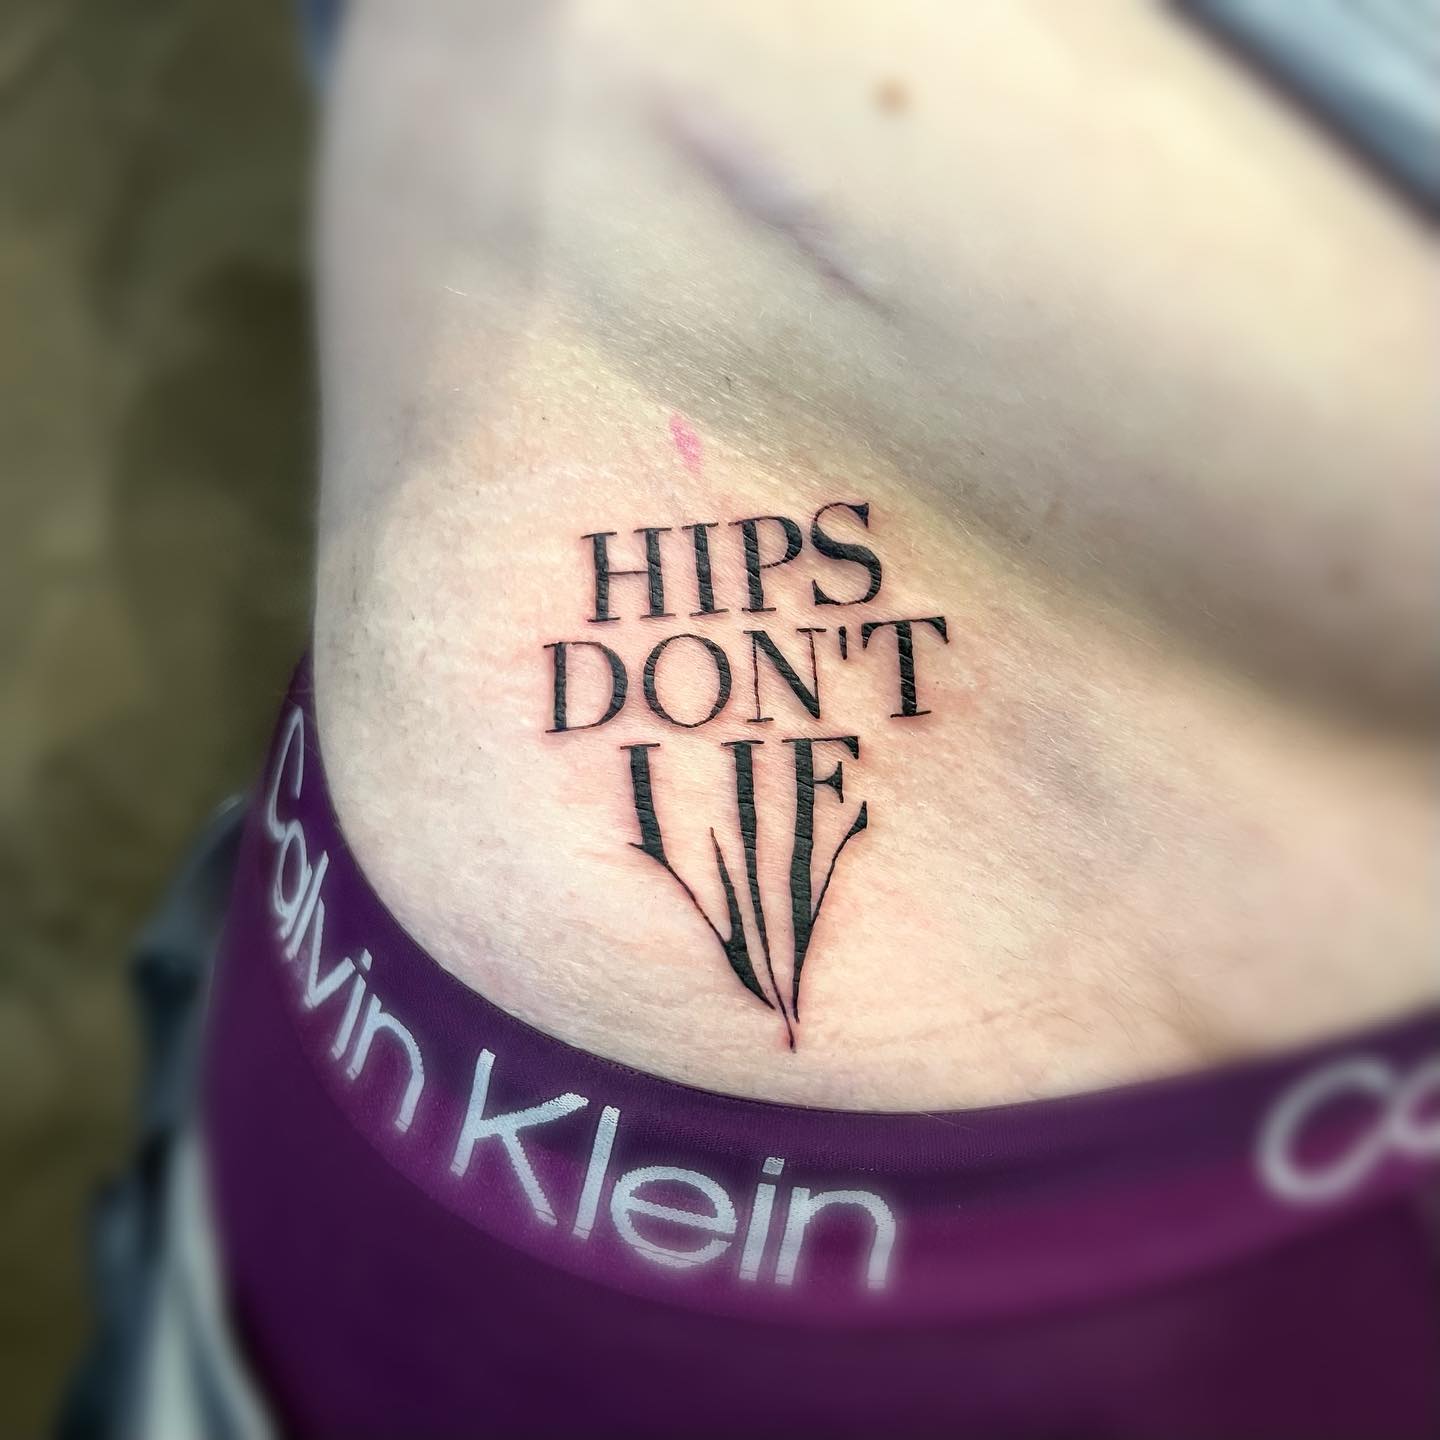 DANKE JOEL! 
.
#hipsdontlie #letteringtattoo #tattooideas #tattoo #tattooed #tat